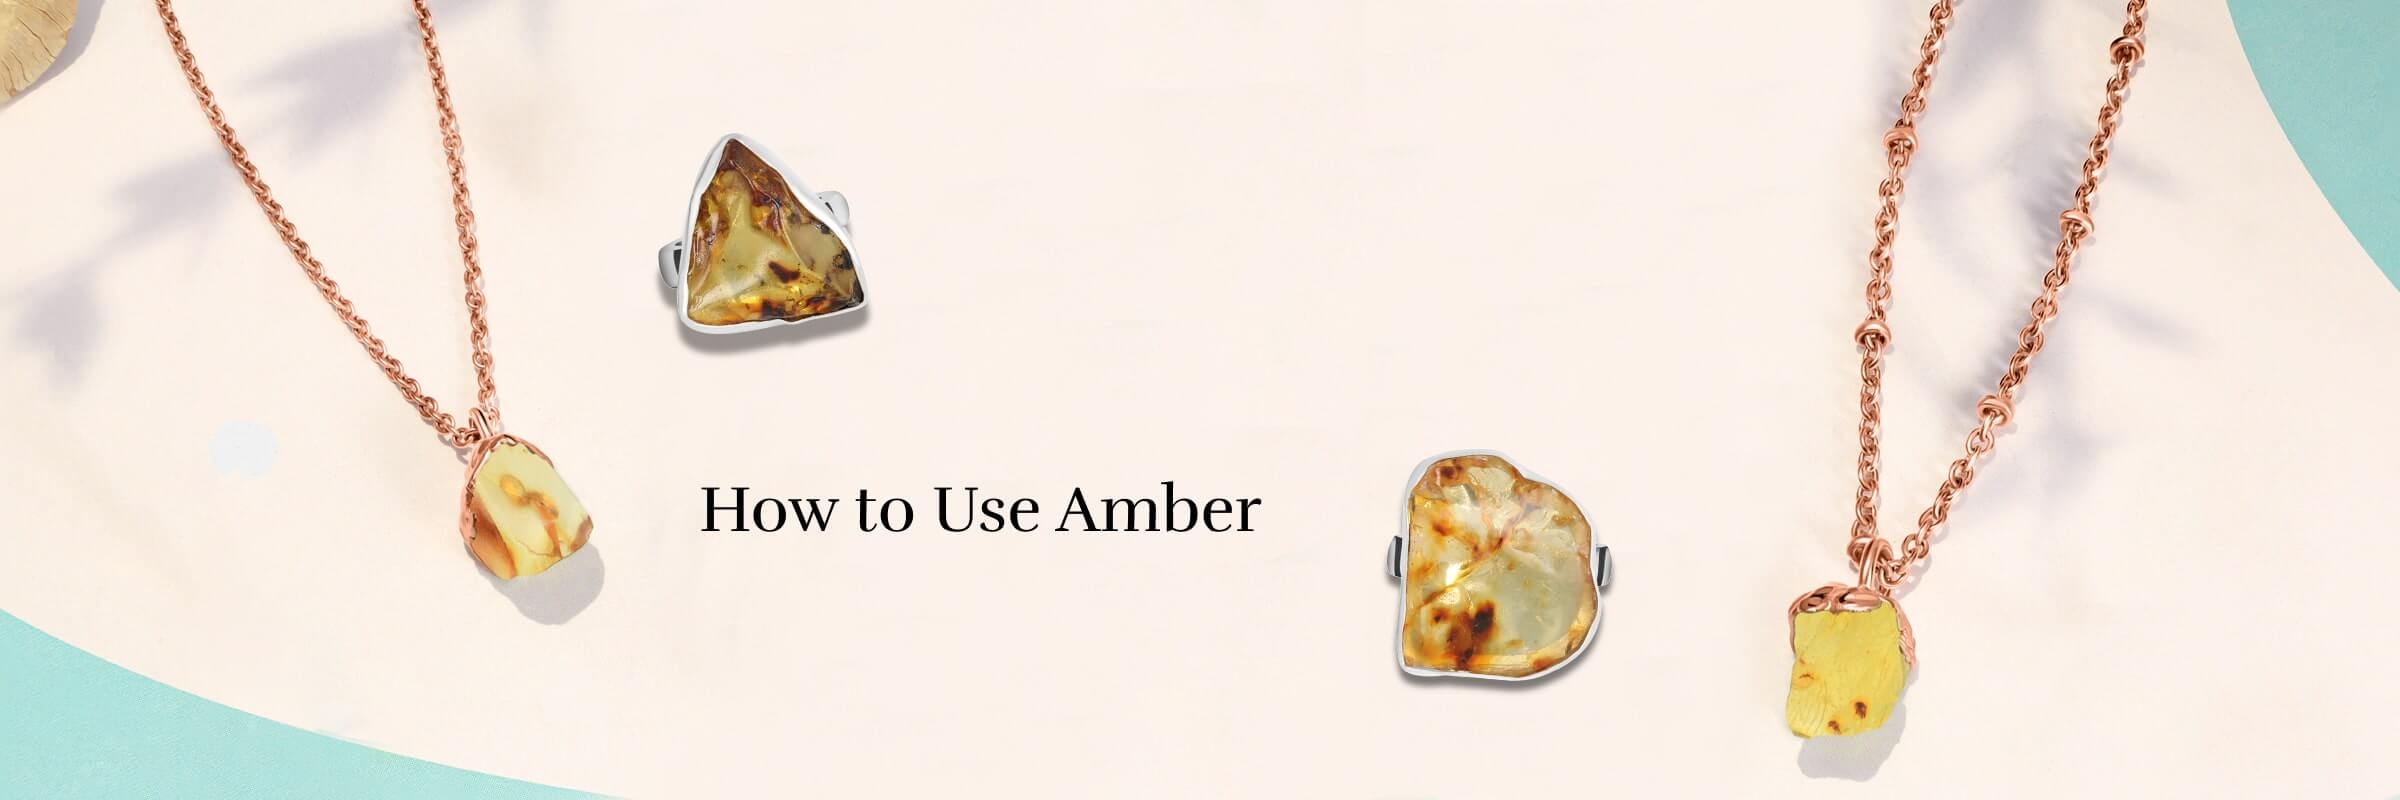 Amber Uses